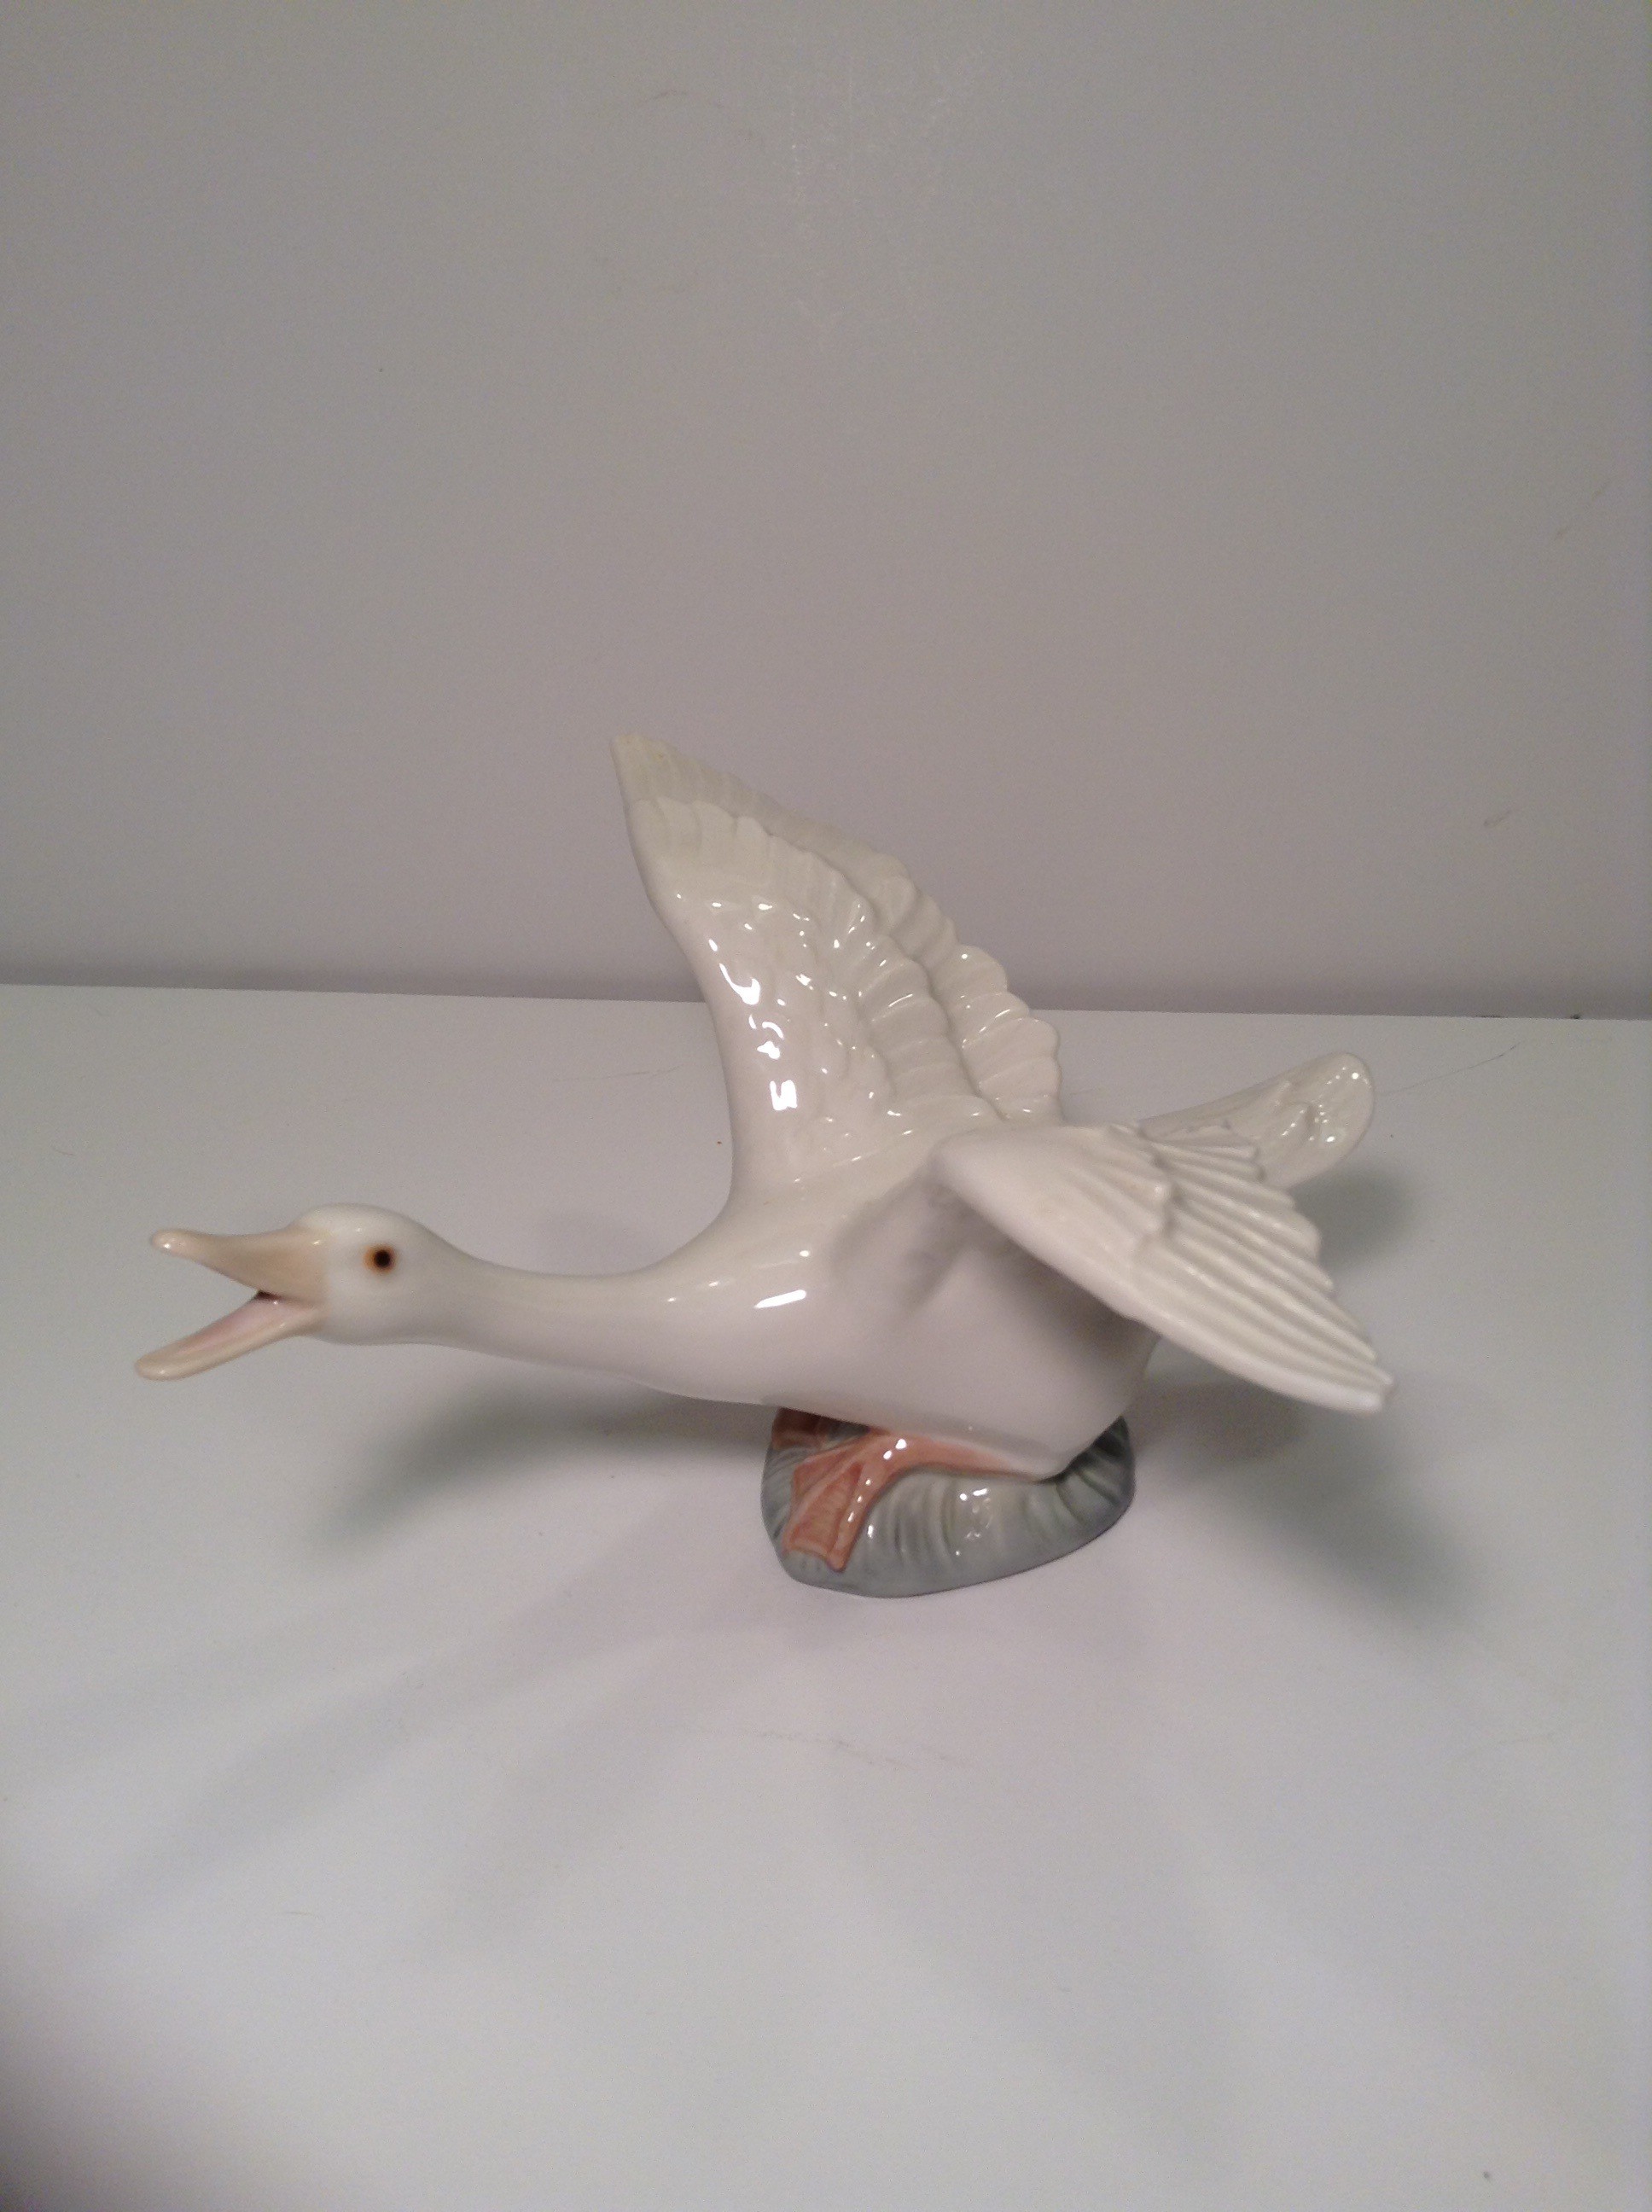 Lladro Flying Duck #1264 Retired Figurine